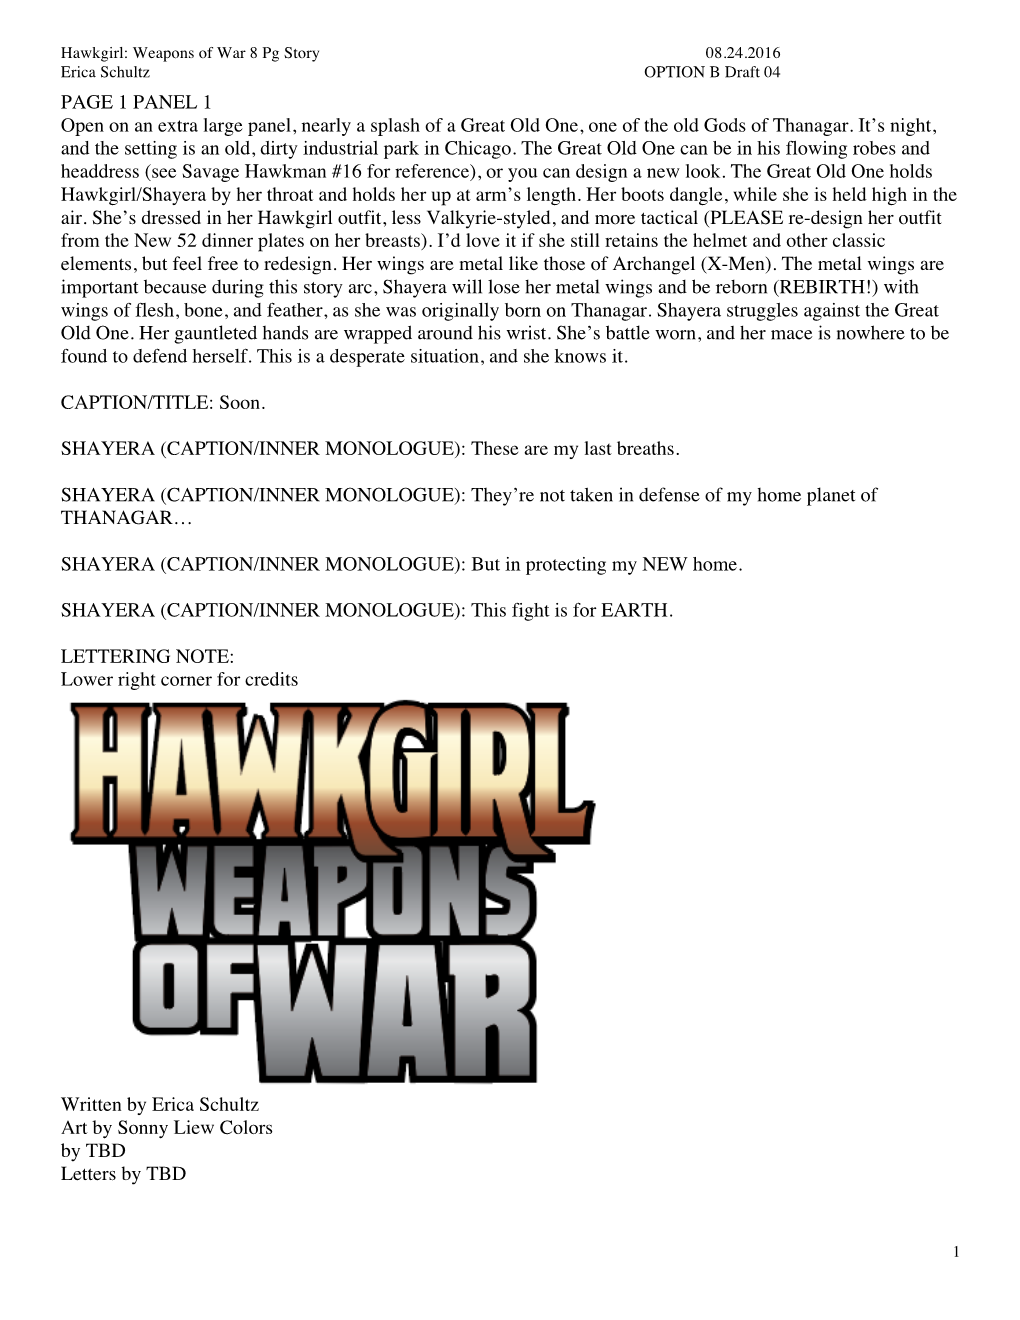 Hawkgirl – Weapons of War (PDF)